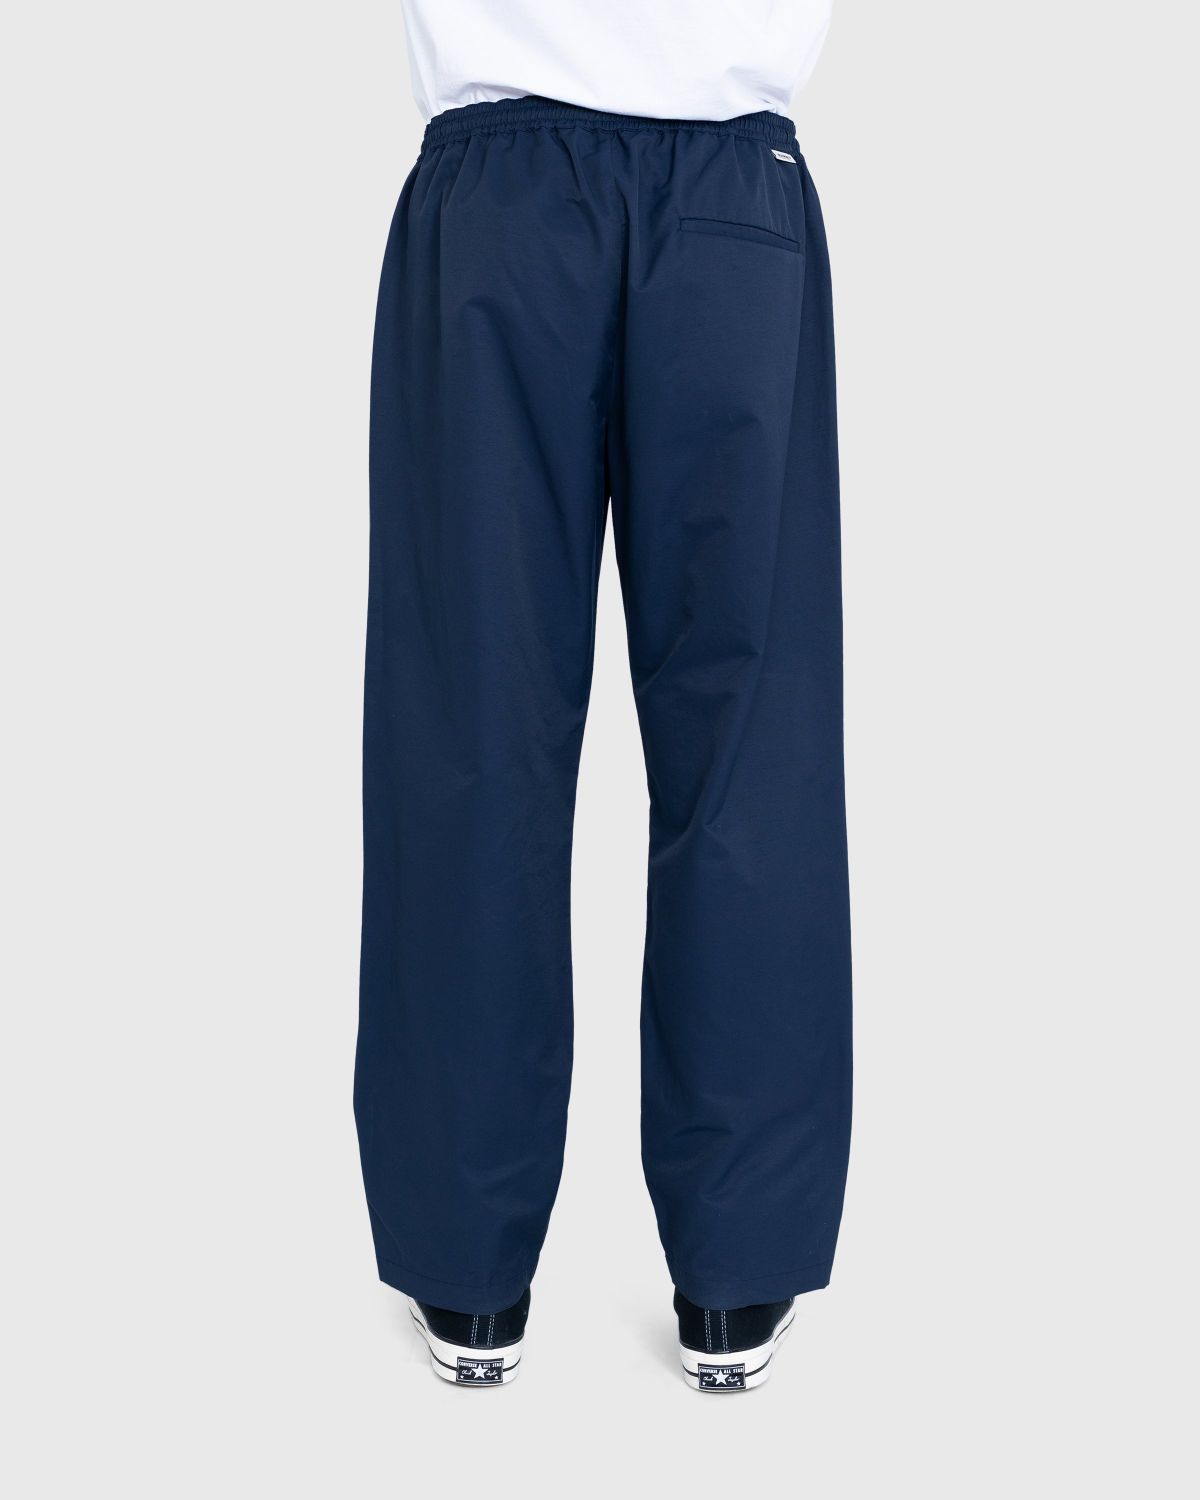 Highsnobiety – Cotton Nylon Elastic Pants Navy - Pants - Blue - Image 4